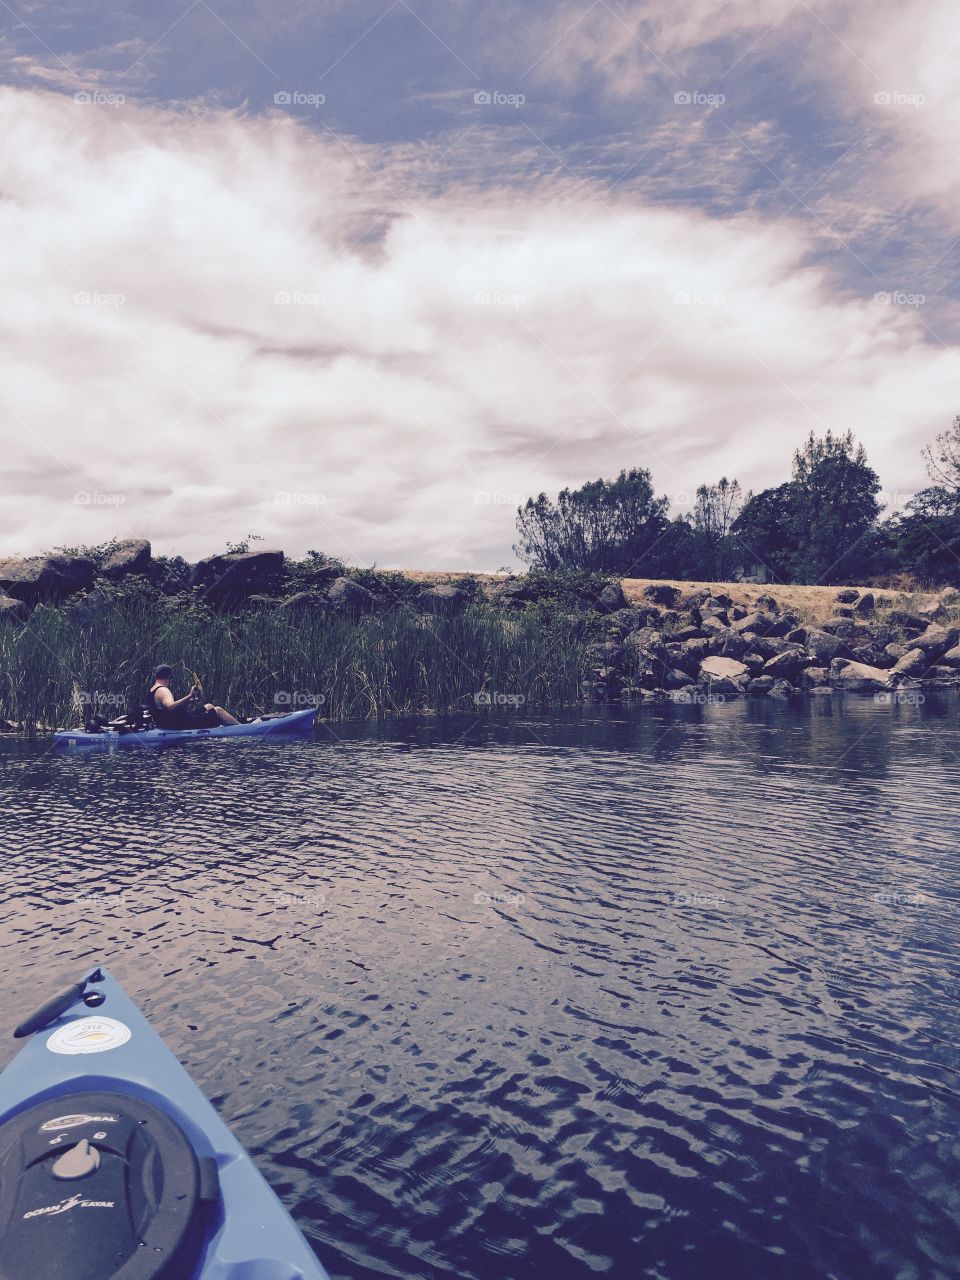 Kayak on hidden valley lake